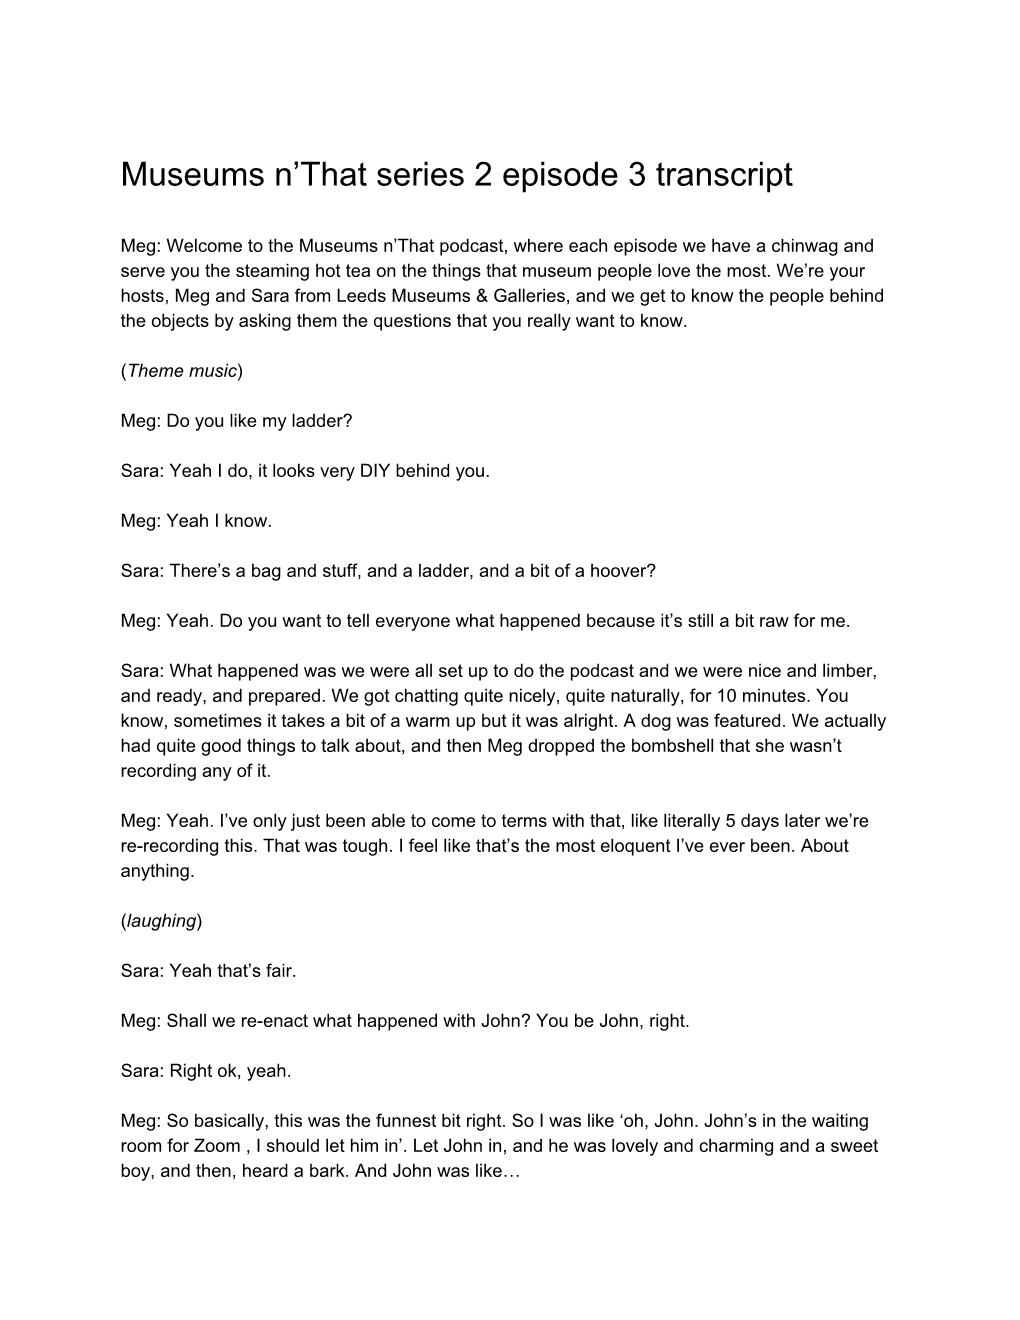 Museums N'that Series 2 Episode 3 Transcript